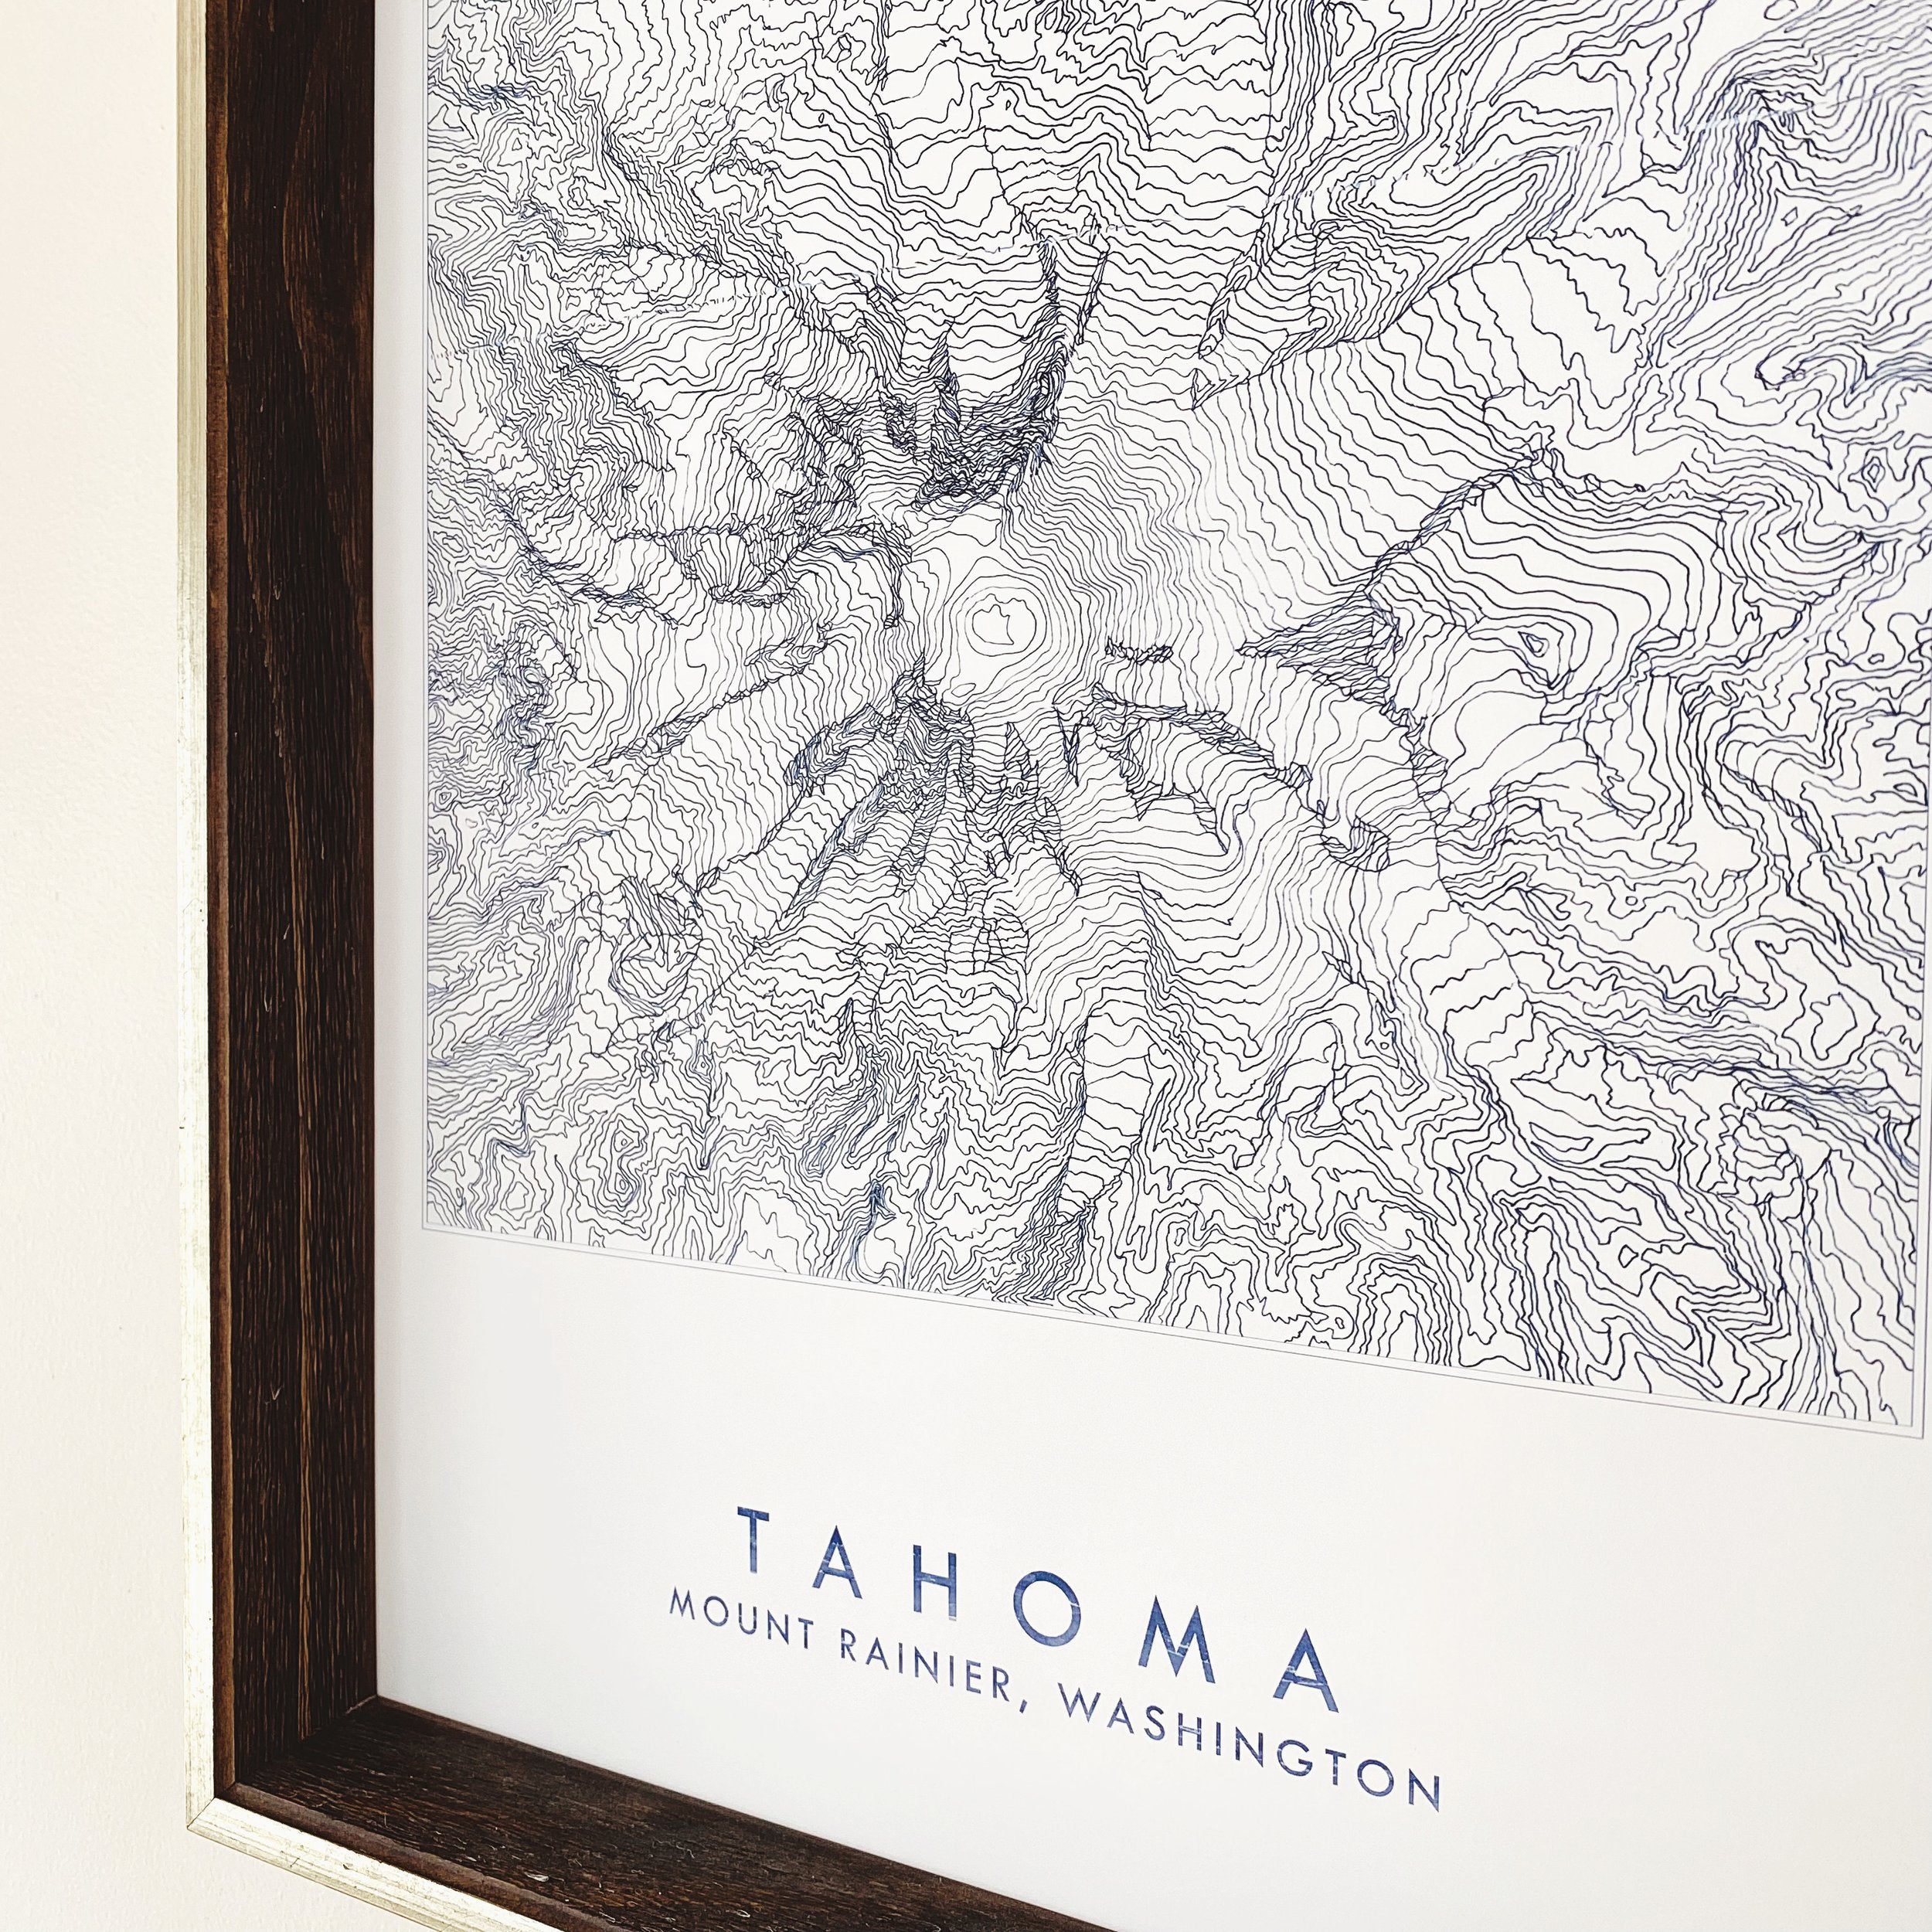 TAHOMA Mount Rainier Washington Topographical Map Drawing: PRINT